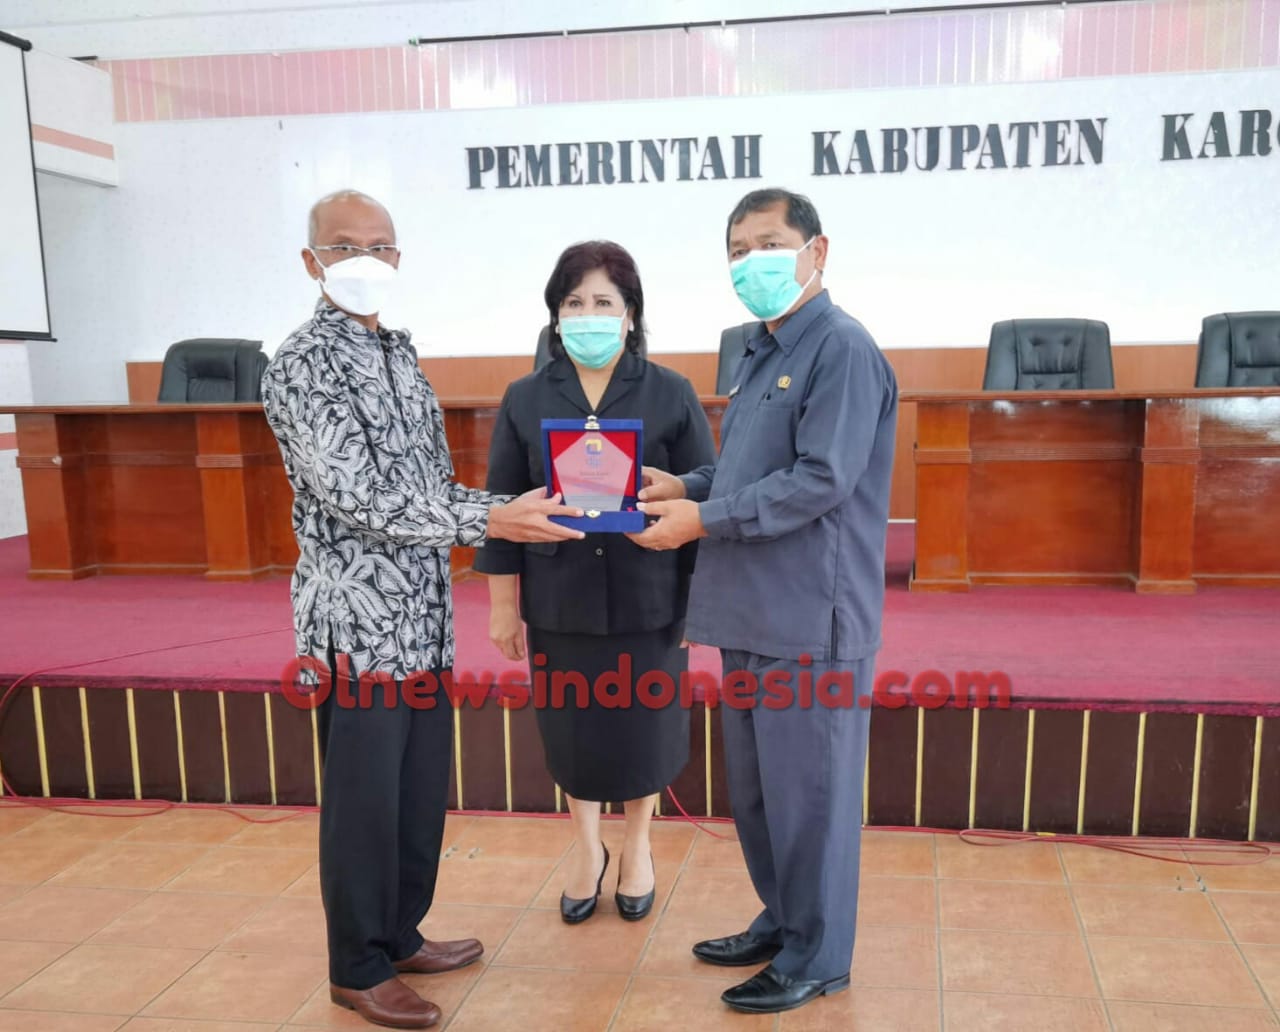 Ket foto : Bupati dan wakil Bupati Karo saat menyerahkan secara secara simbolis cenderamata kepada perwakilan DJP Sumut,Senin (29/03) 2021 (Ist)